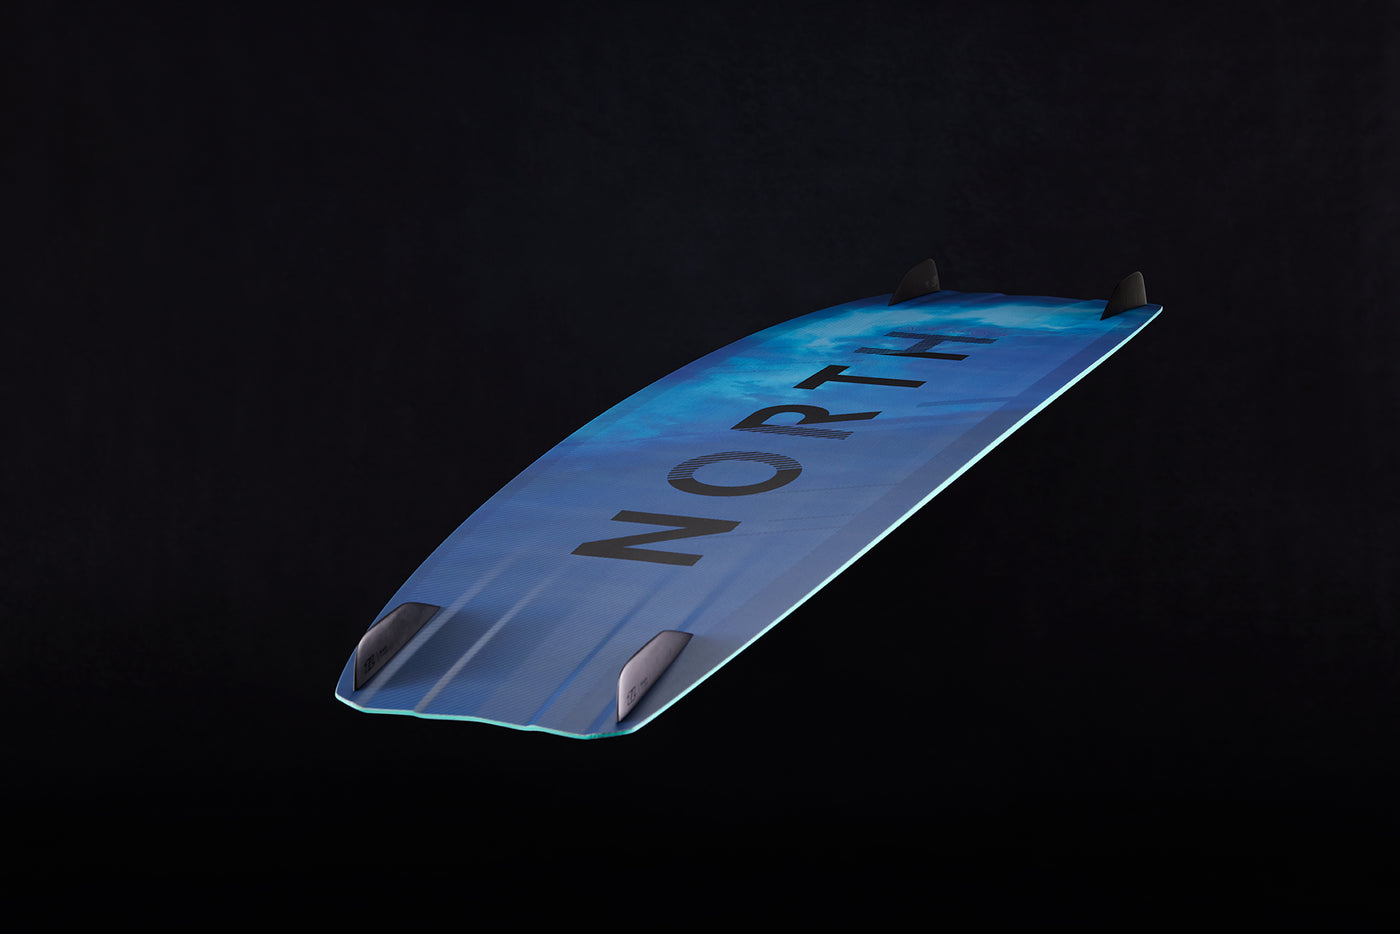 North Atmos Hybrid 2023 (Ocean Blue) 136 x 40cm